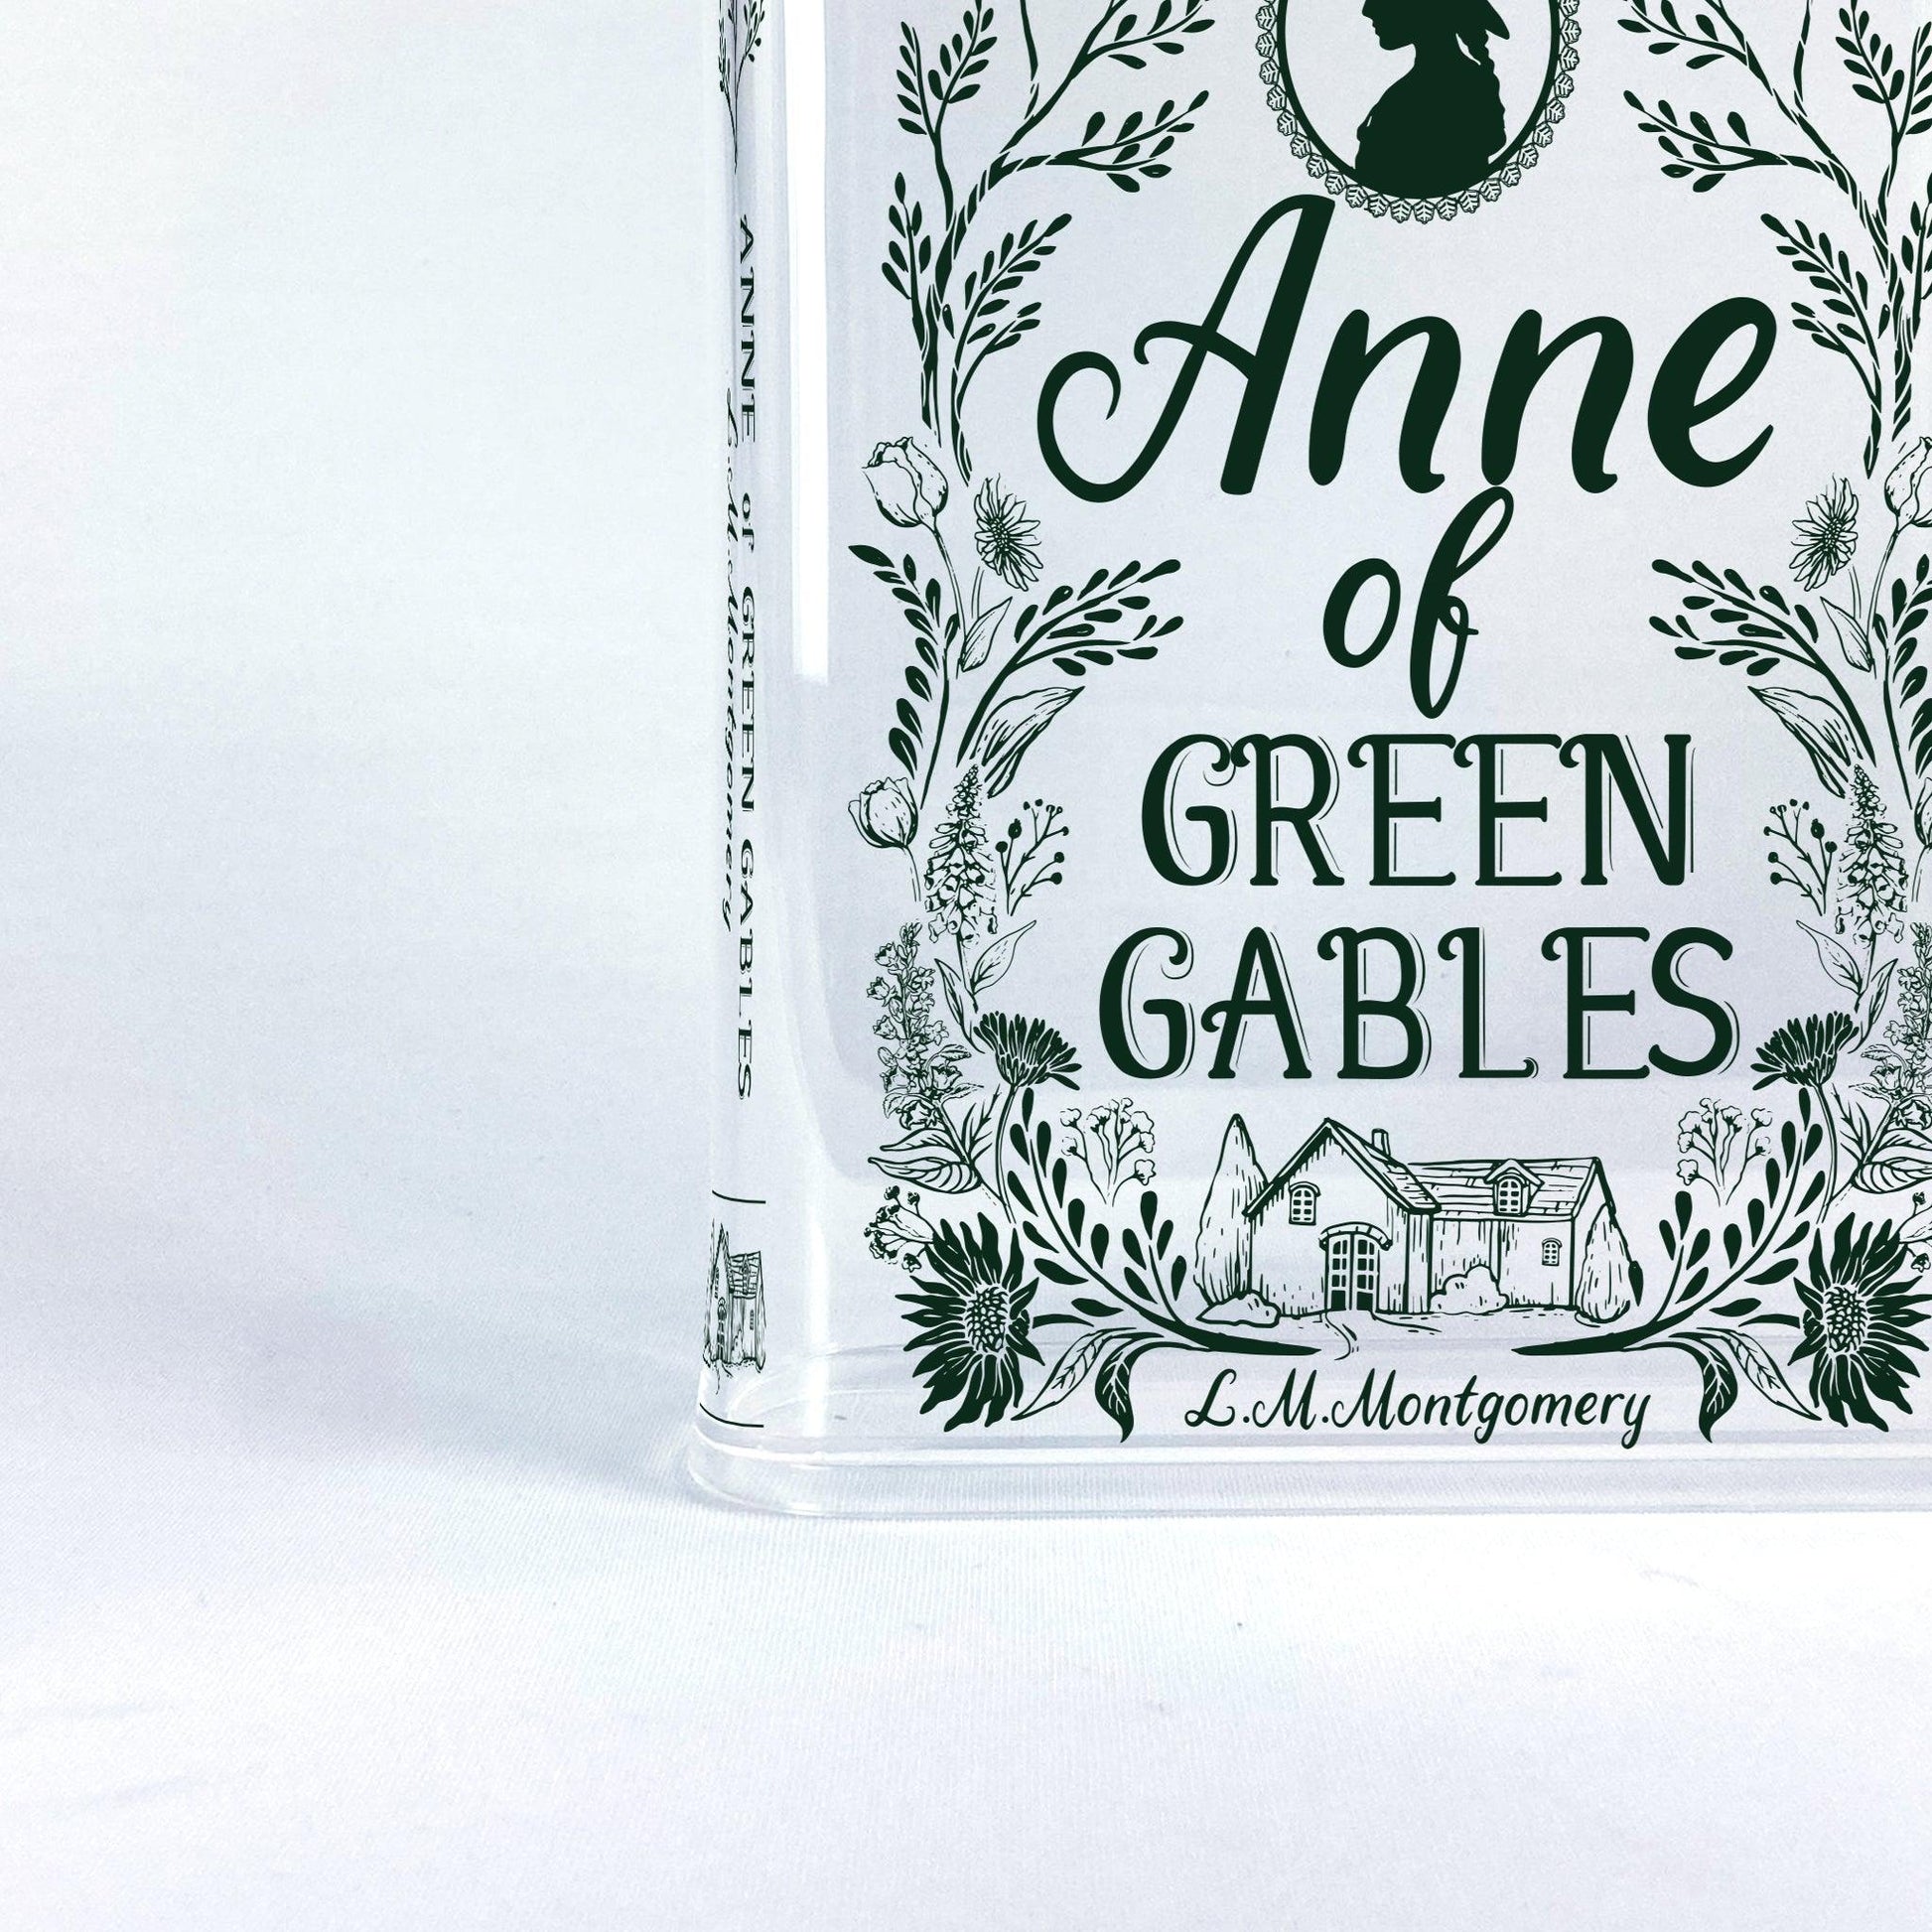 Anne of Green Gables Acrylic Bookish Vase - Bookish Vase